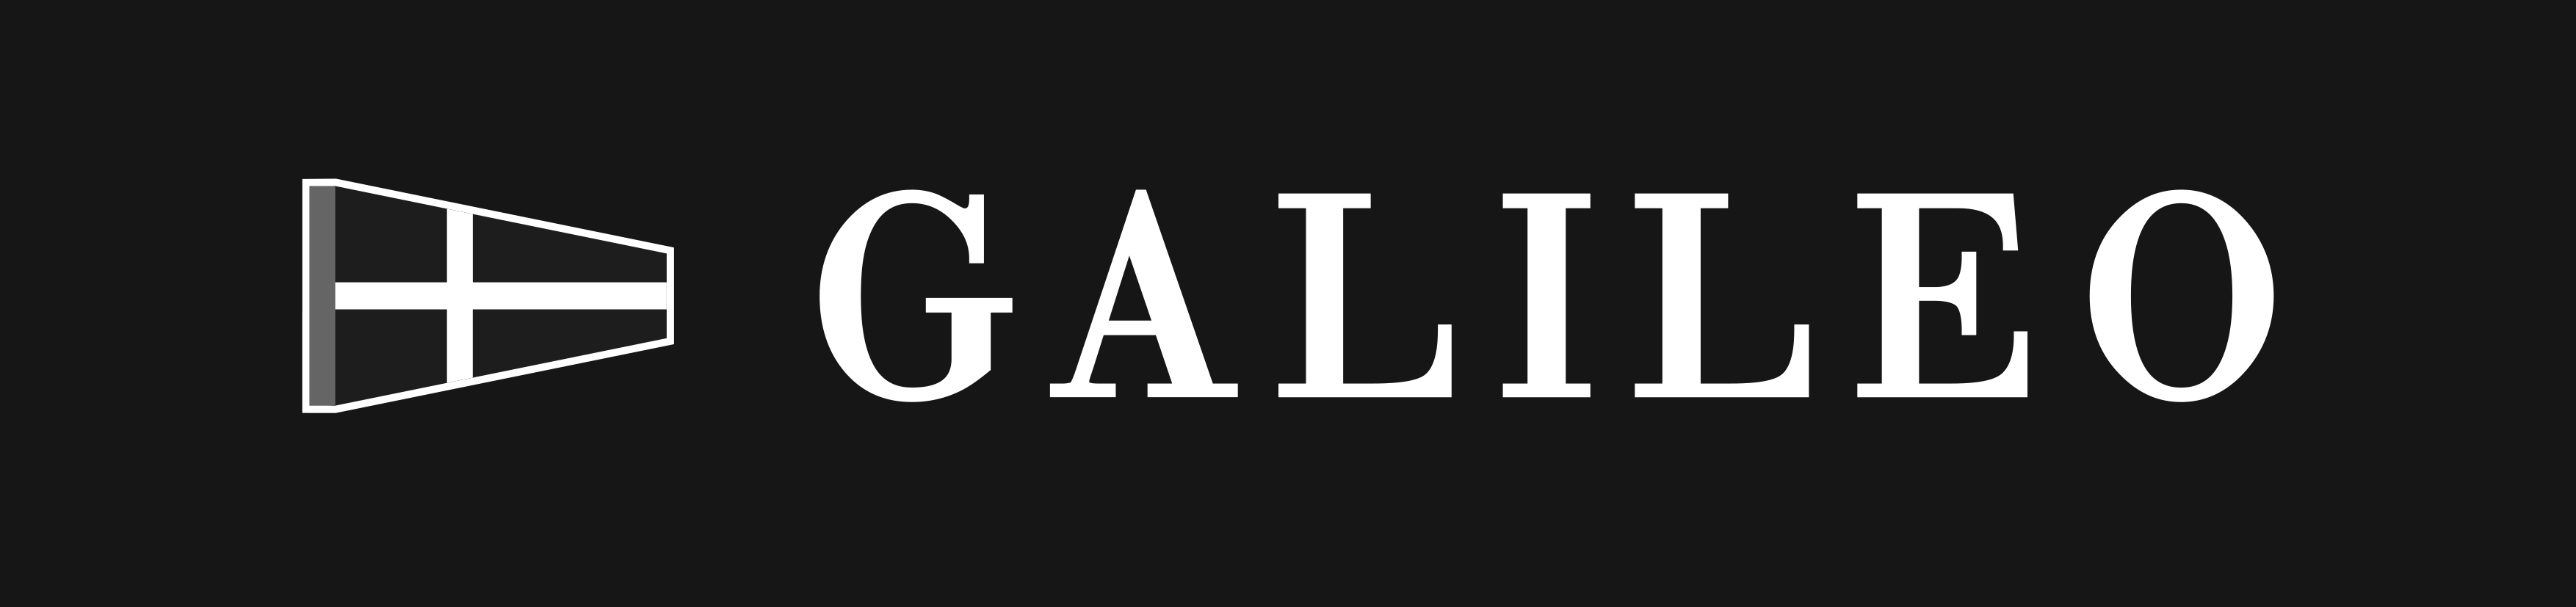 Galileo_logo_2014_negativ.png